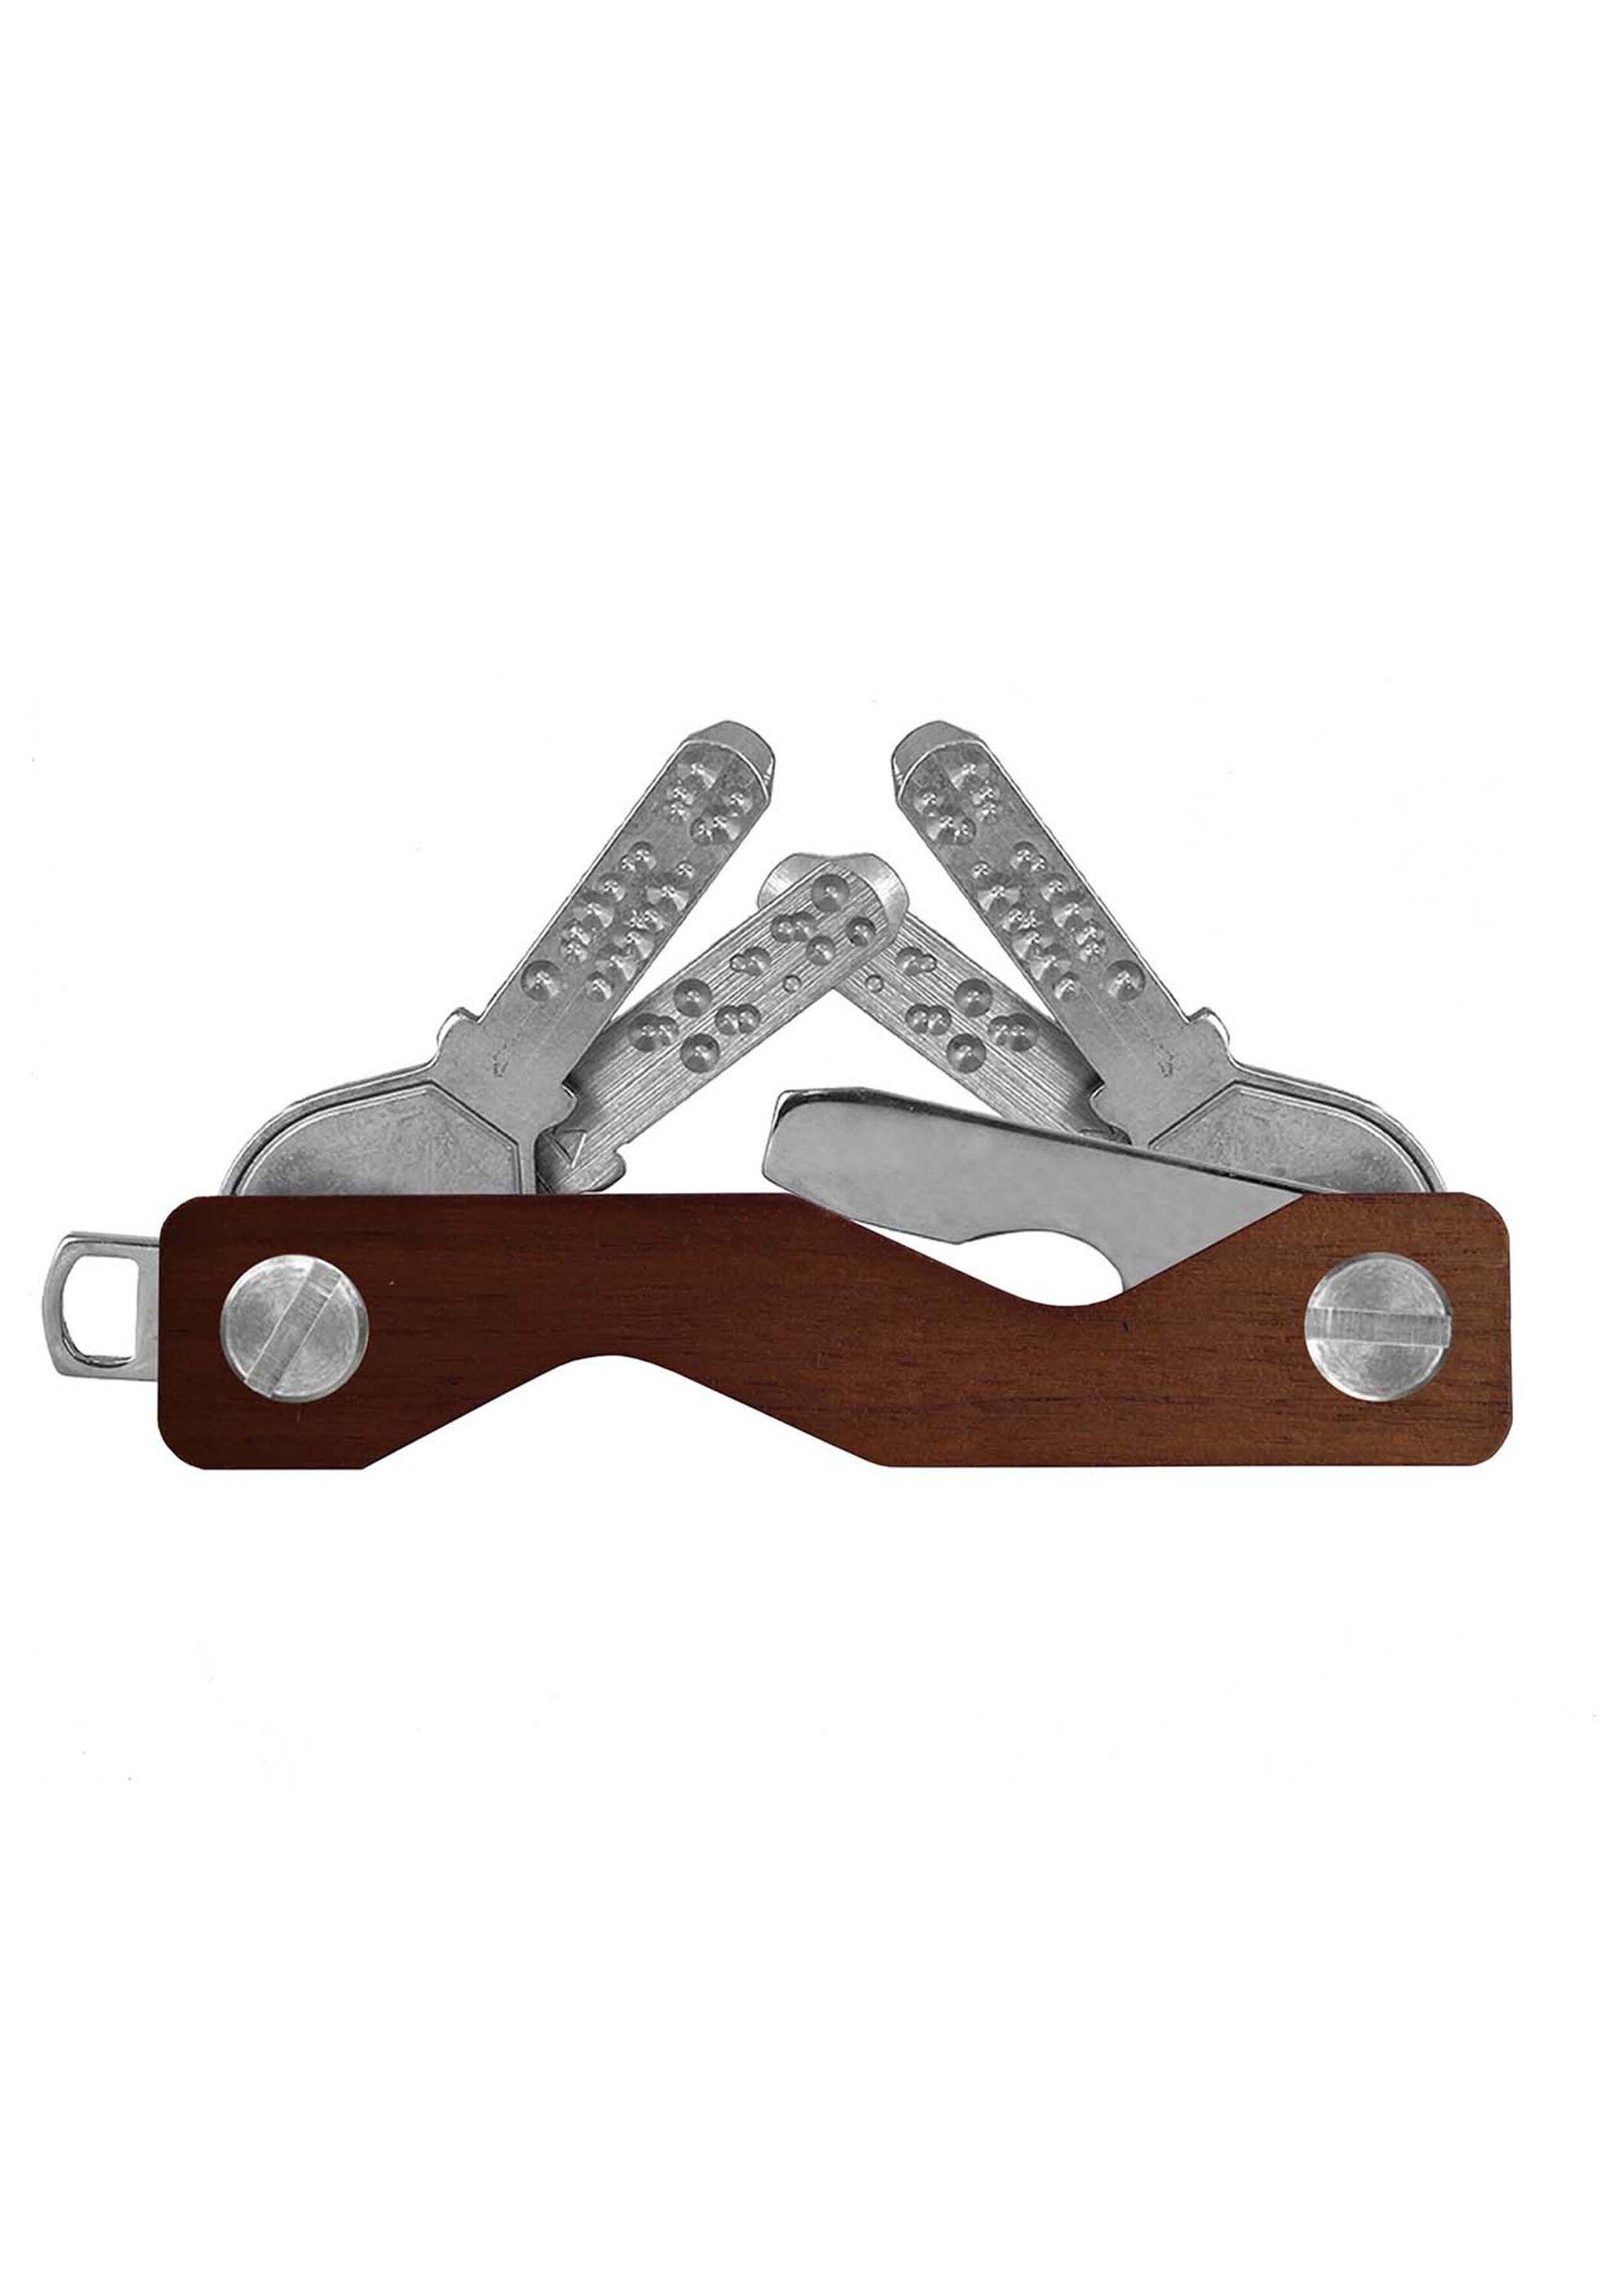 S3, made Wood SWISS Schlüsselanhänger braun keycabins